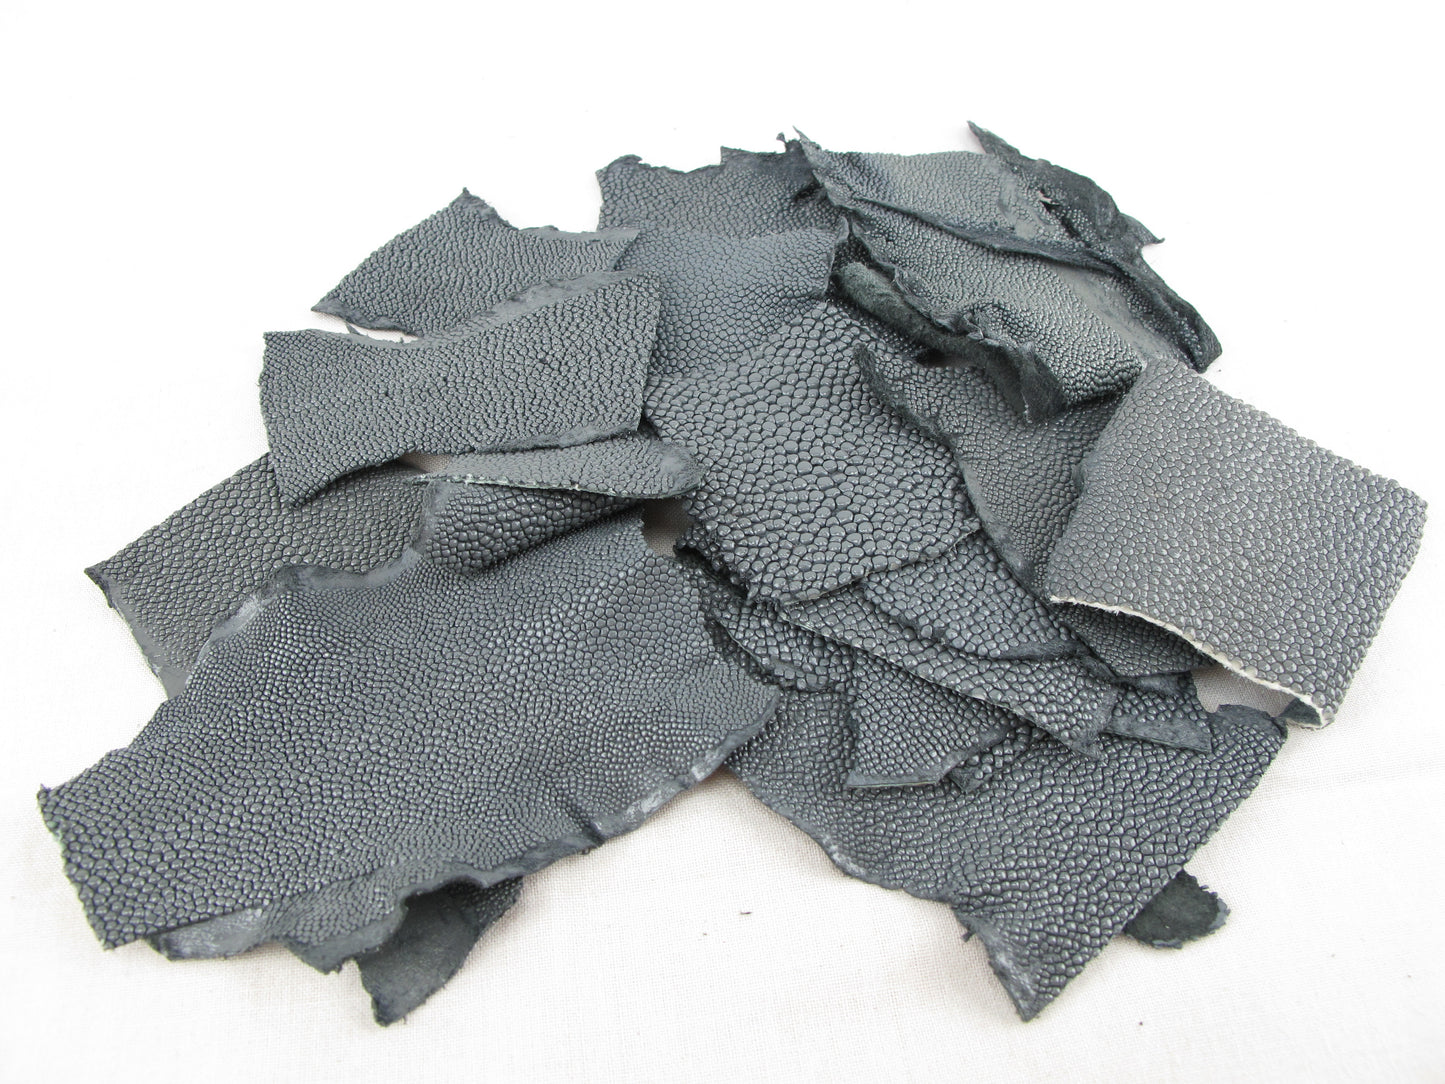 Genuine Stingray Skin Leather Scraps Hide Pelt 100 grams